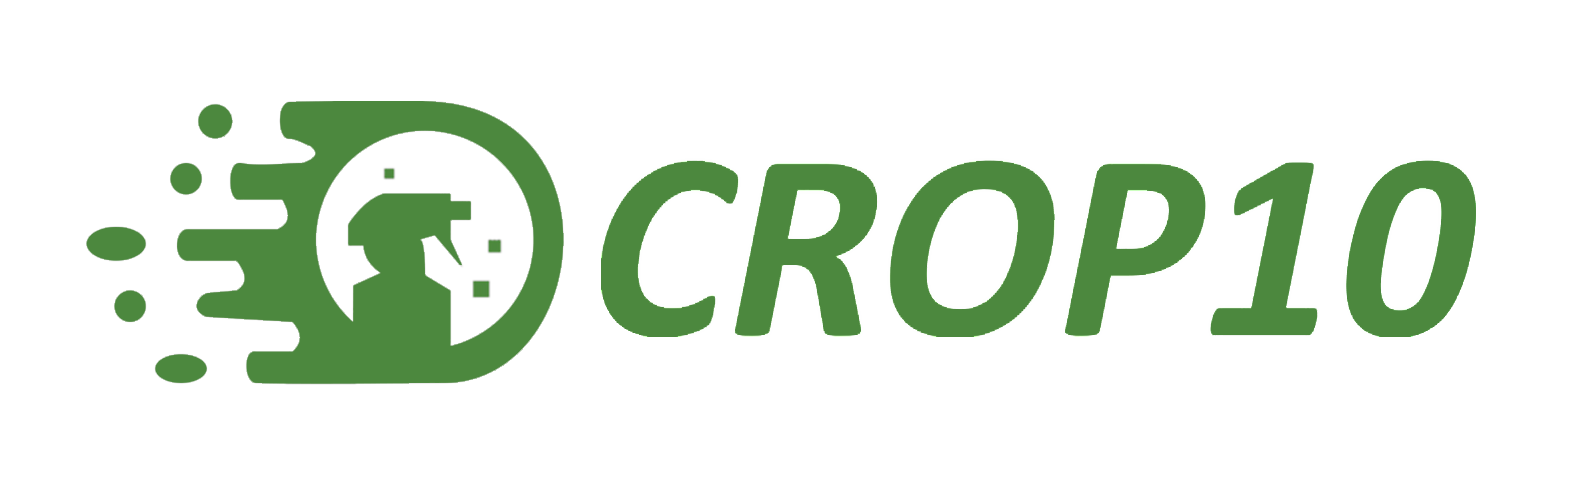 crop10.com